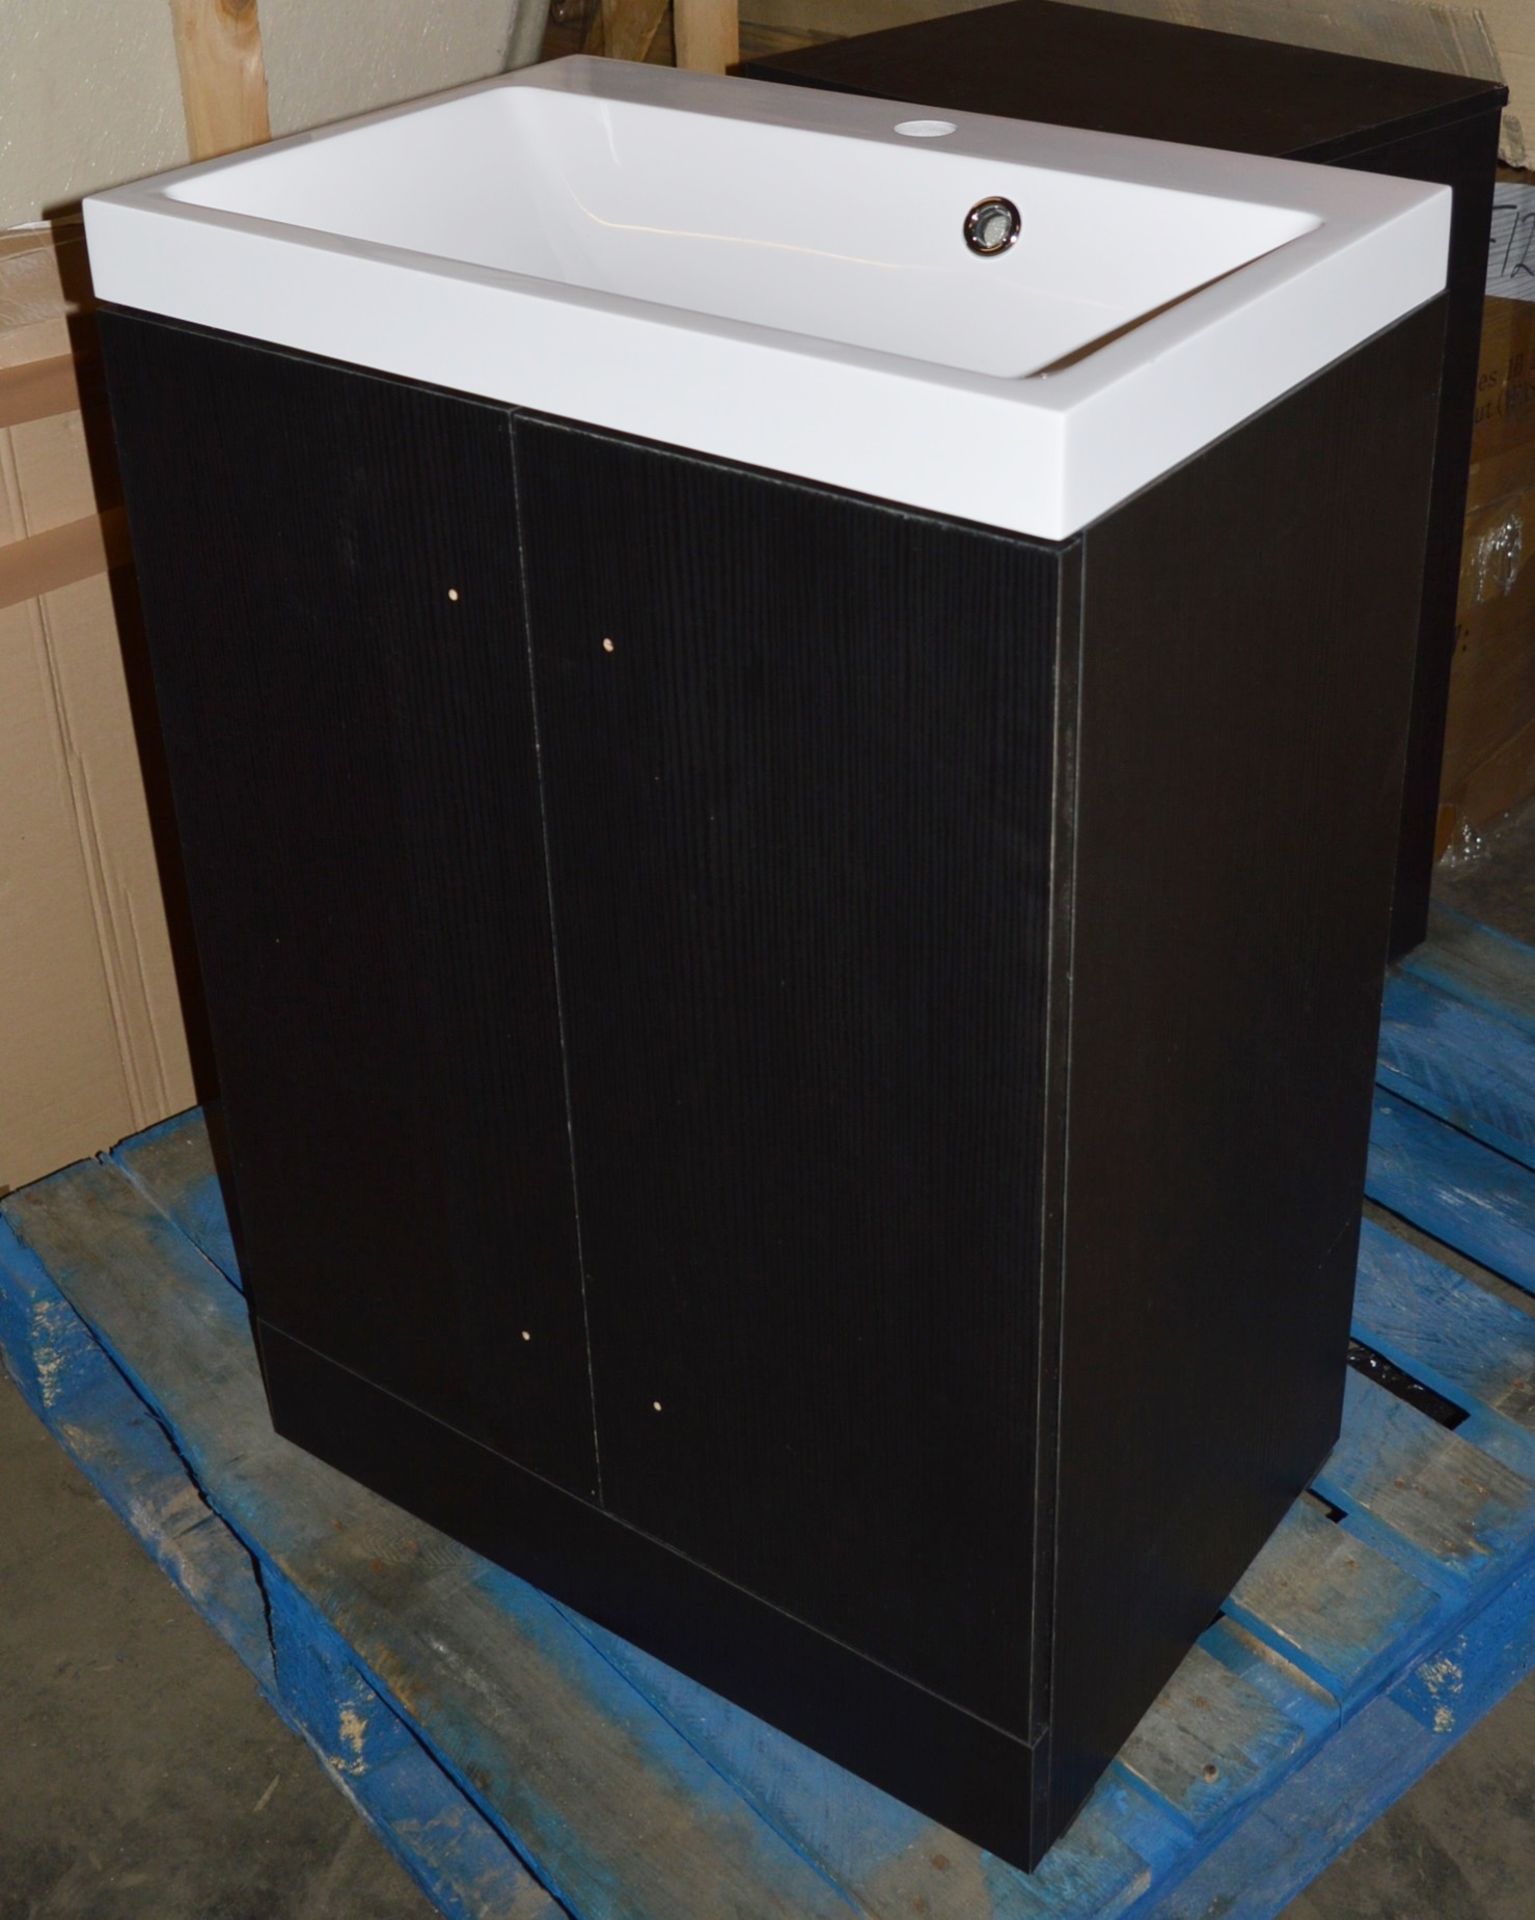 1 x Drift Essen Grey 2 Door Floor Mounted Cabinet With Sink Basin and Satin Chrome Handles - - Image 3 of 9